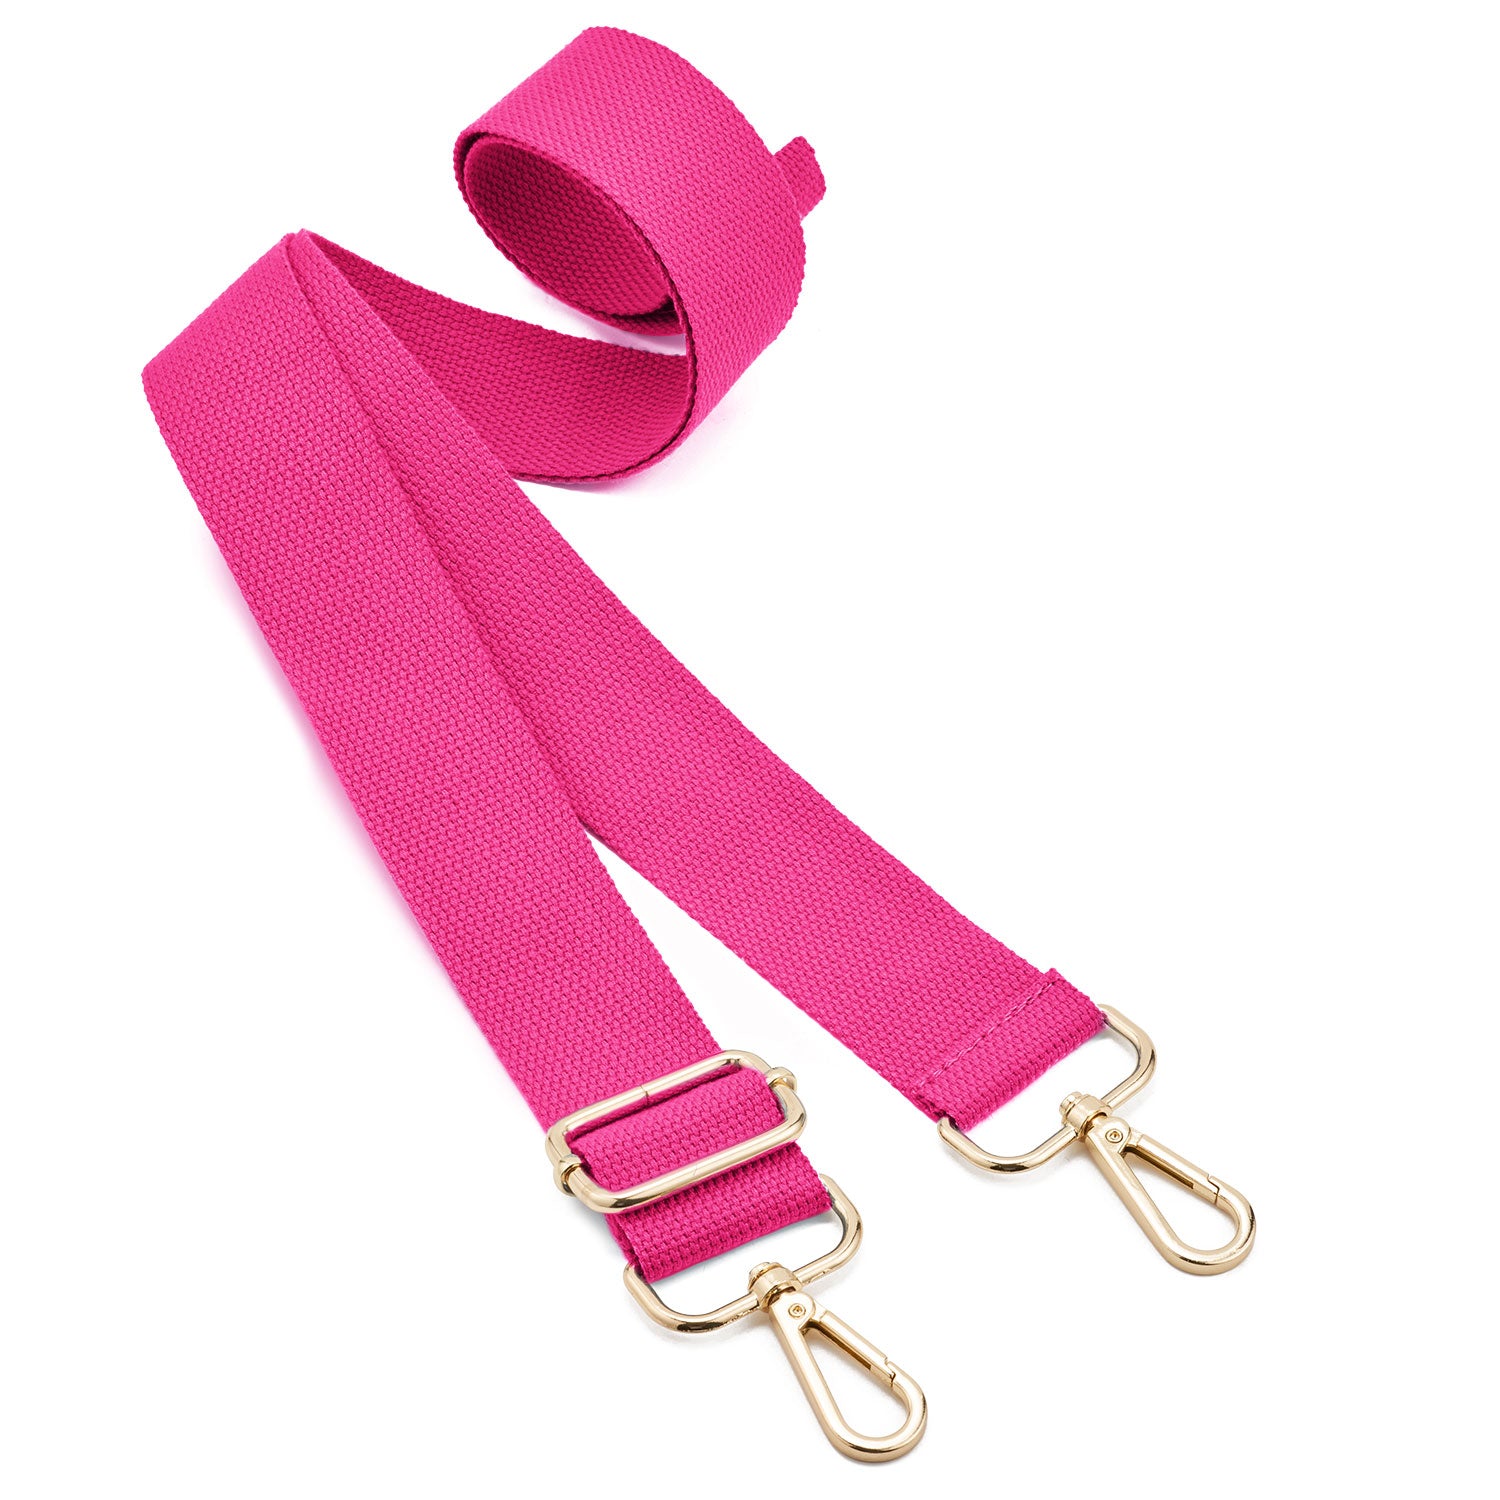 OULARIO Multi Pochette Accessories Replacement Strap Adjustable Crossbody Wide Cavas Strap for Shoulder Bags Multi Purpose Strap (Pink)